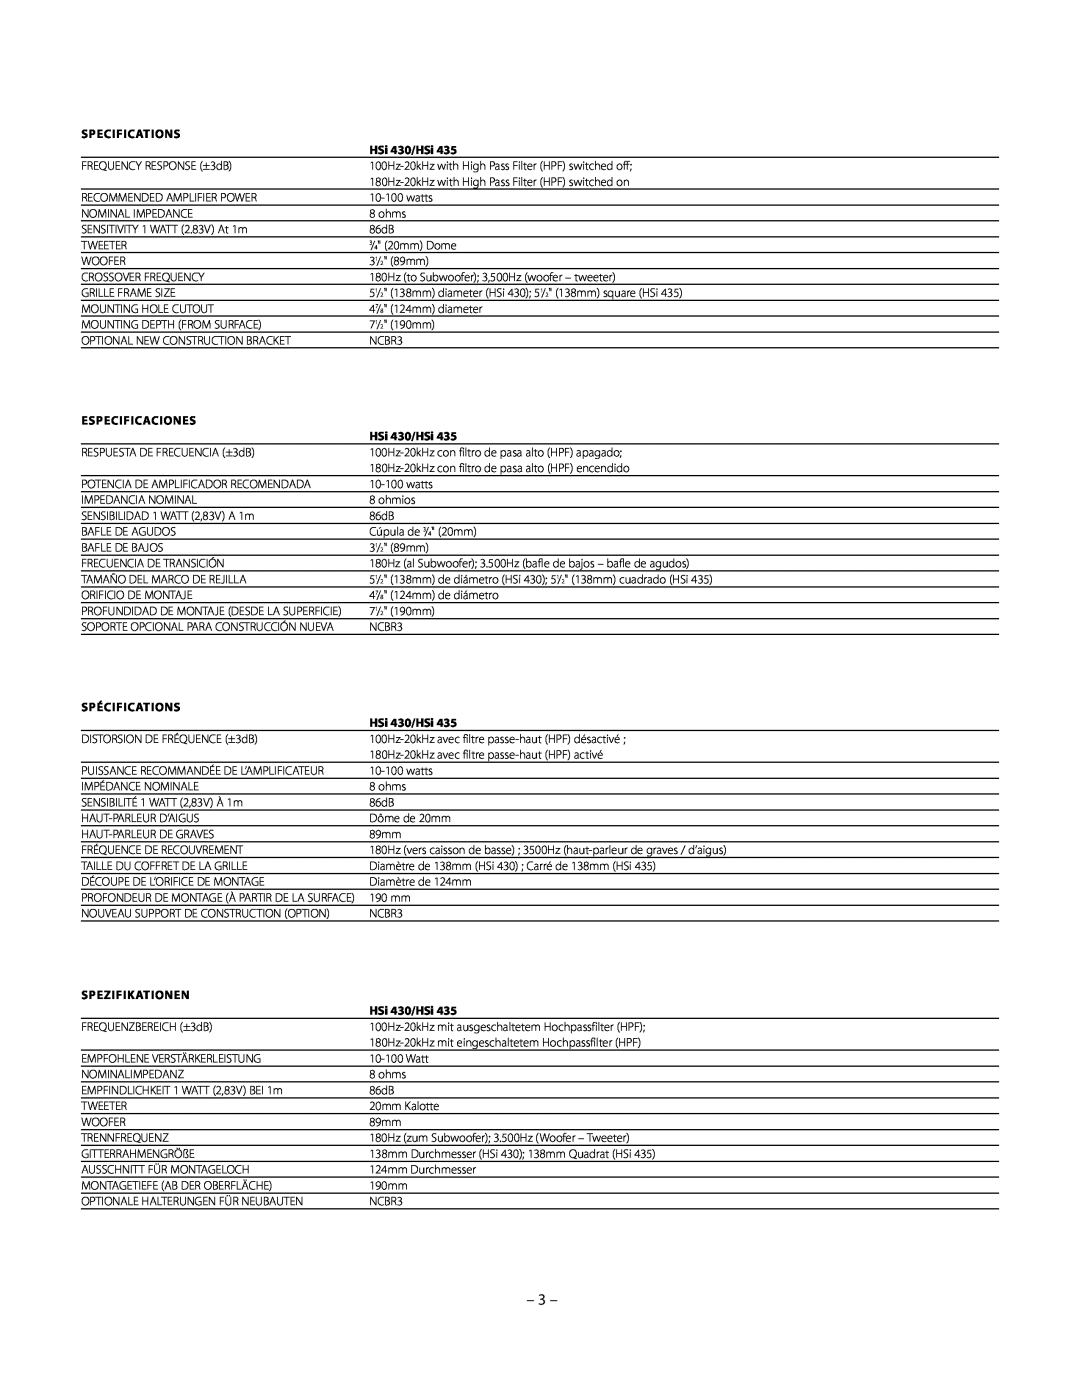 Boston Acoustics HSi 435 owner manual Specifications, HSi 430/HSi, Especificaciones, Spécifications, Spezifikationen 